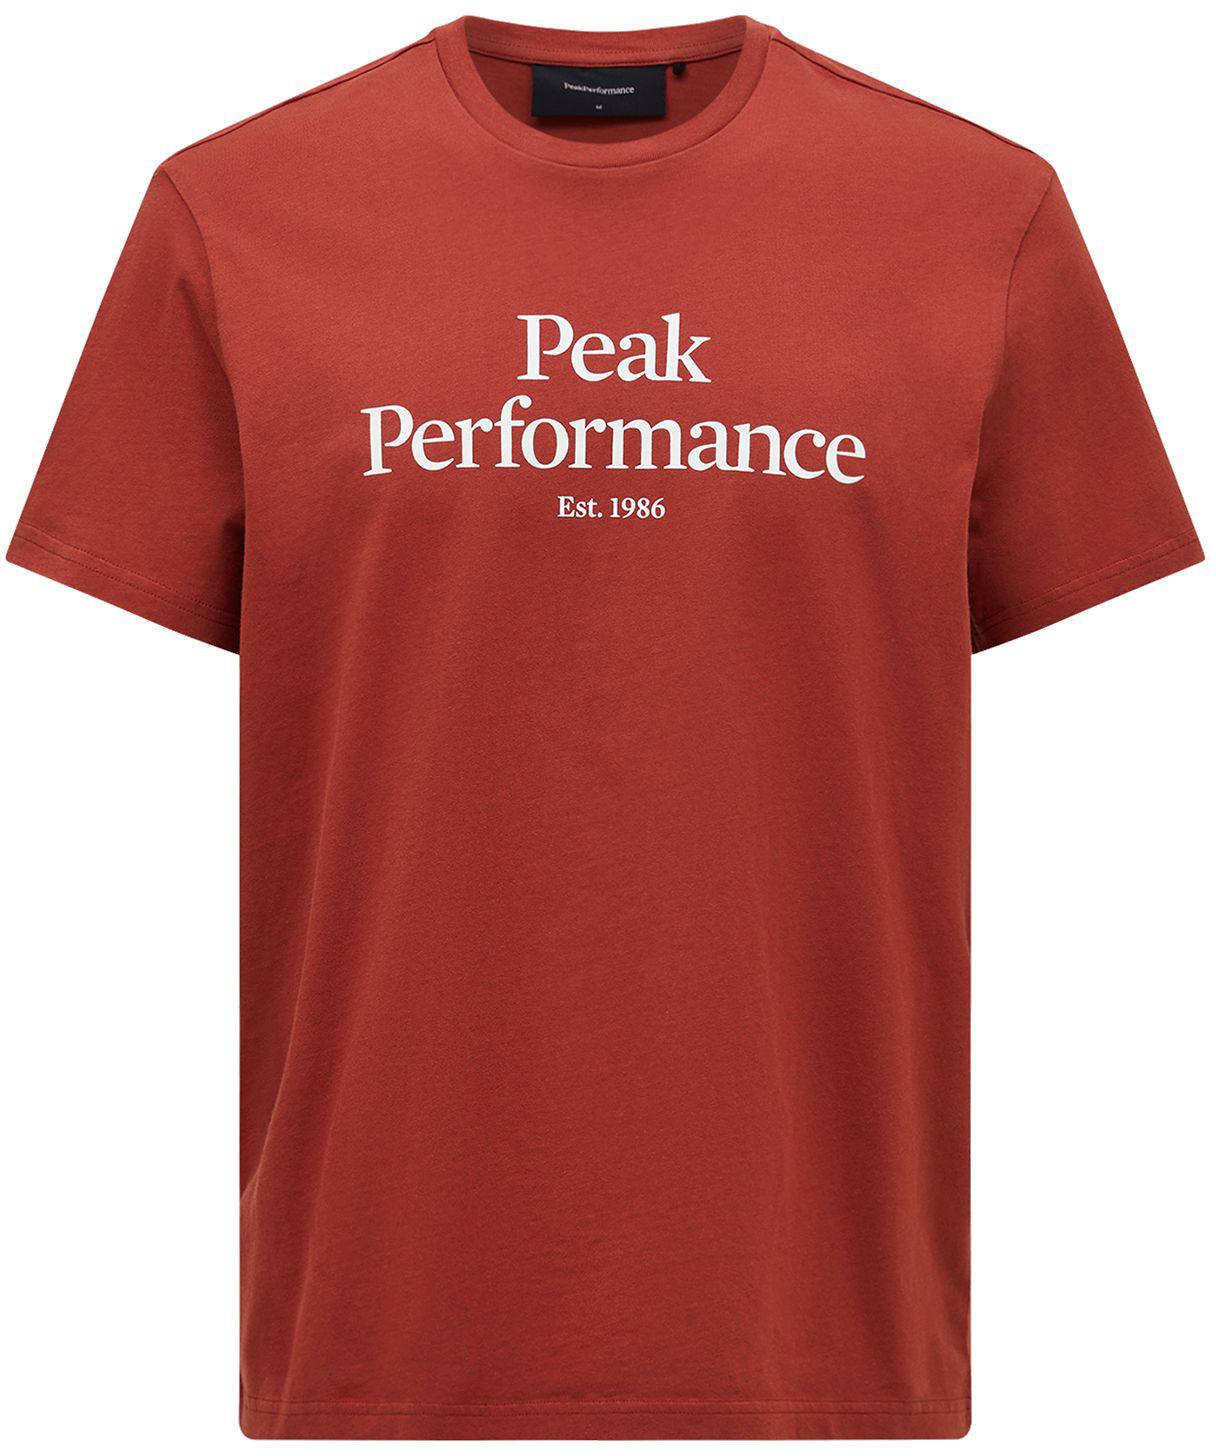 Peak Performance Men’s Original Tee